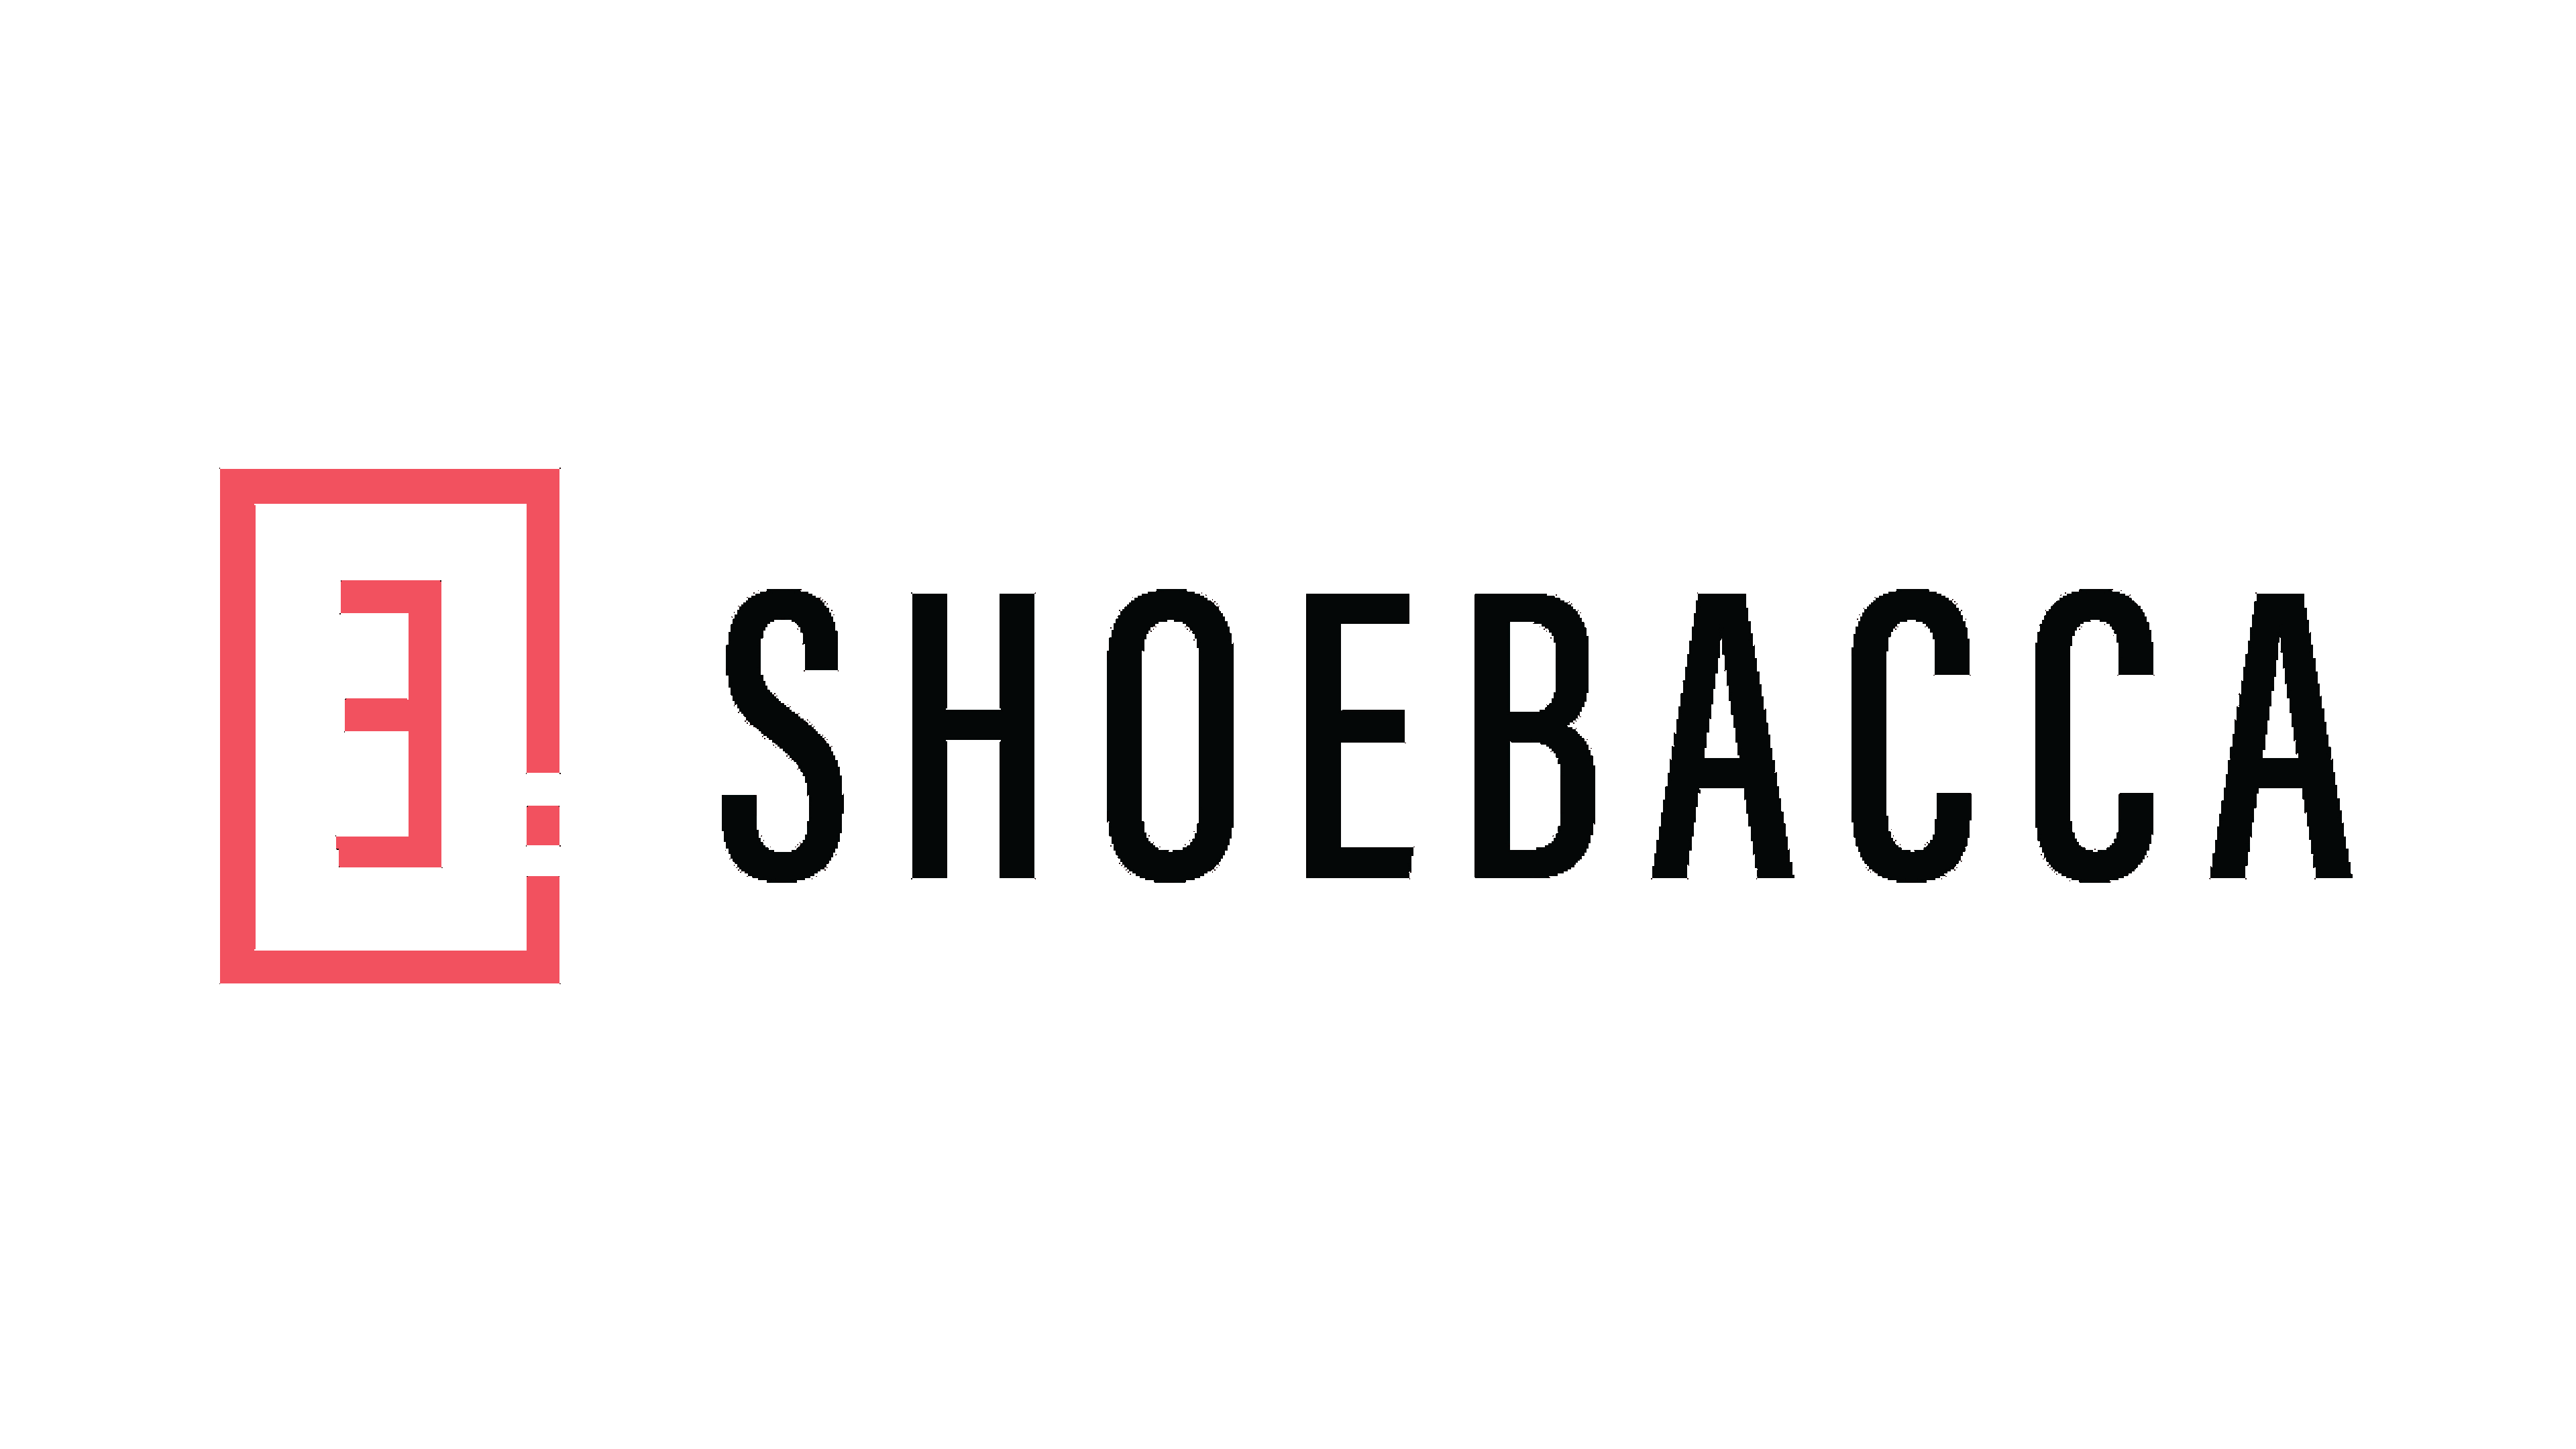 Shoebacca Customer Success